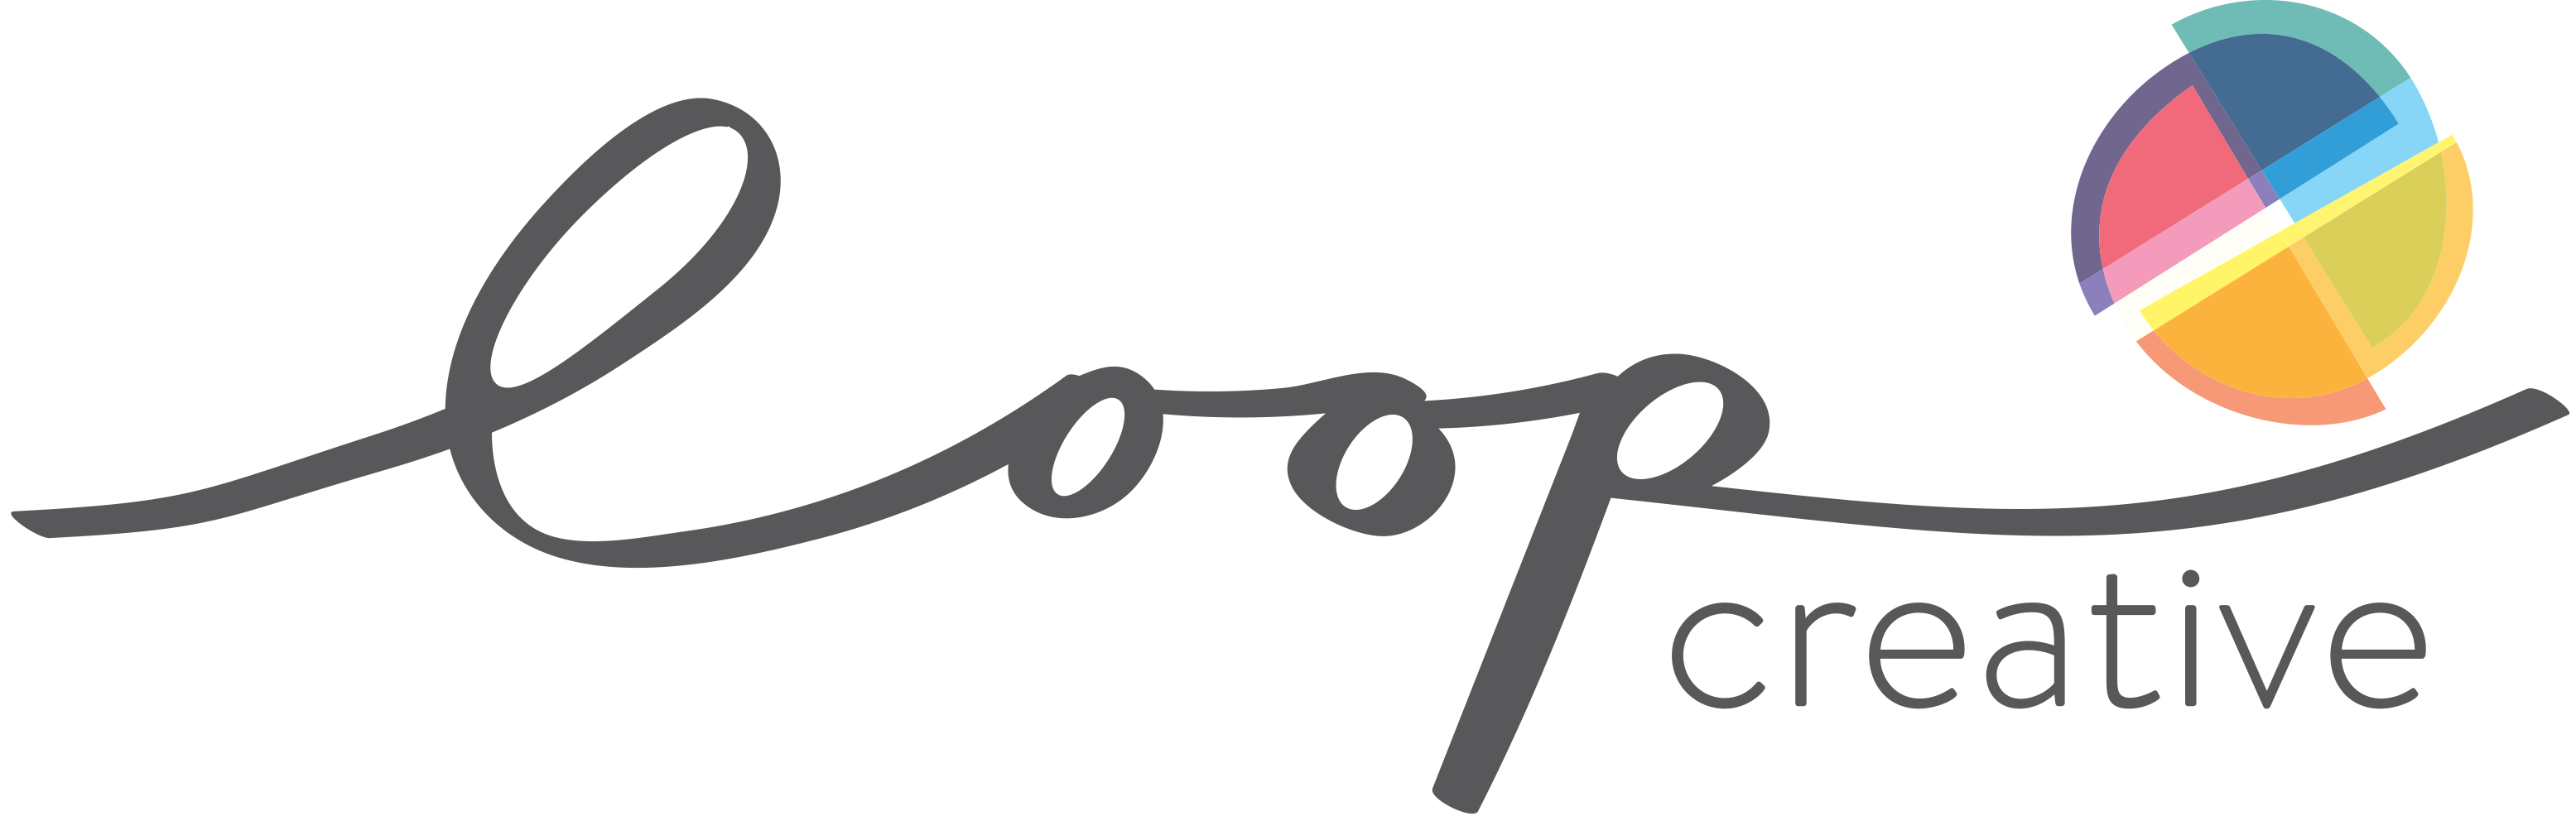 Loop Creative logo